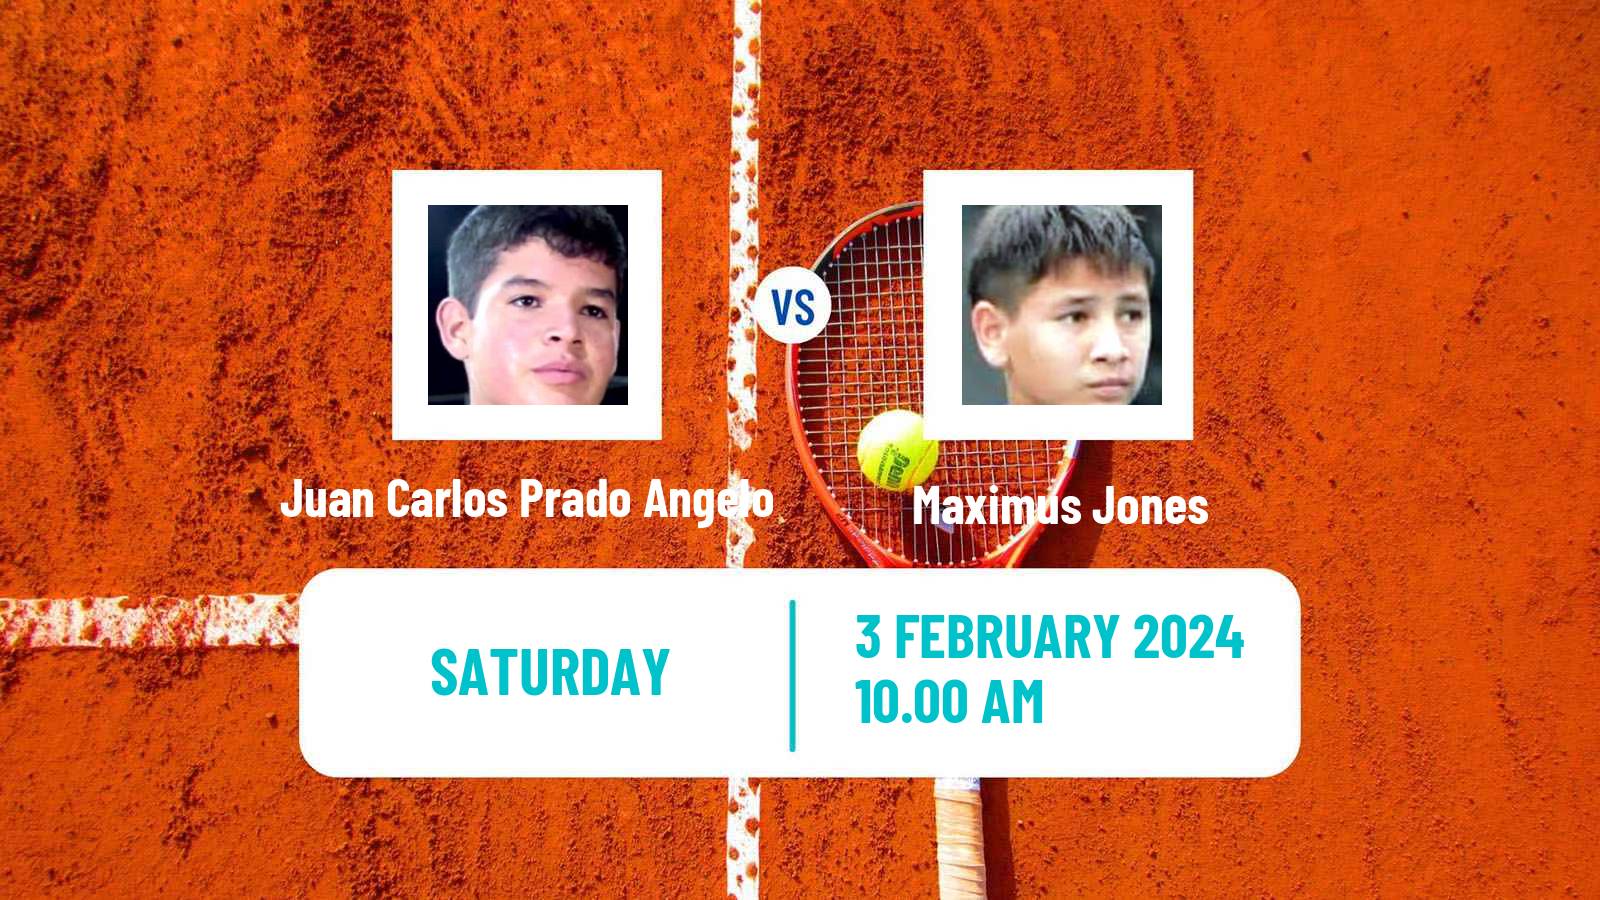 Tennis Davis Cup World Group II Juan Carlos Prado Angelo - Maximus Jones